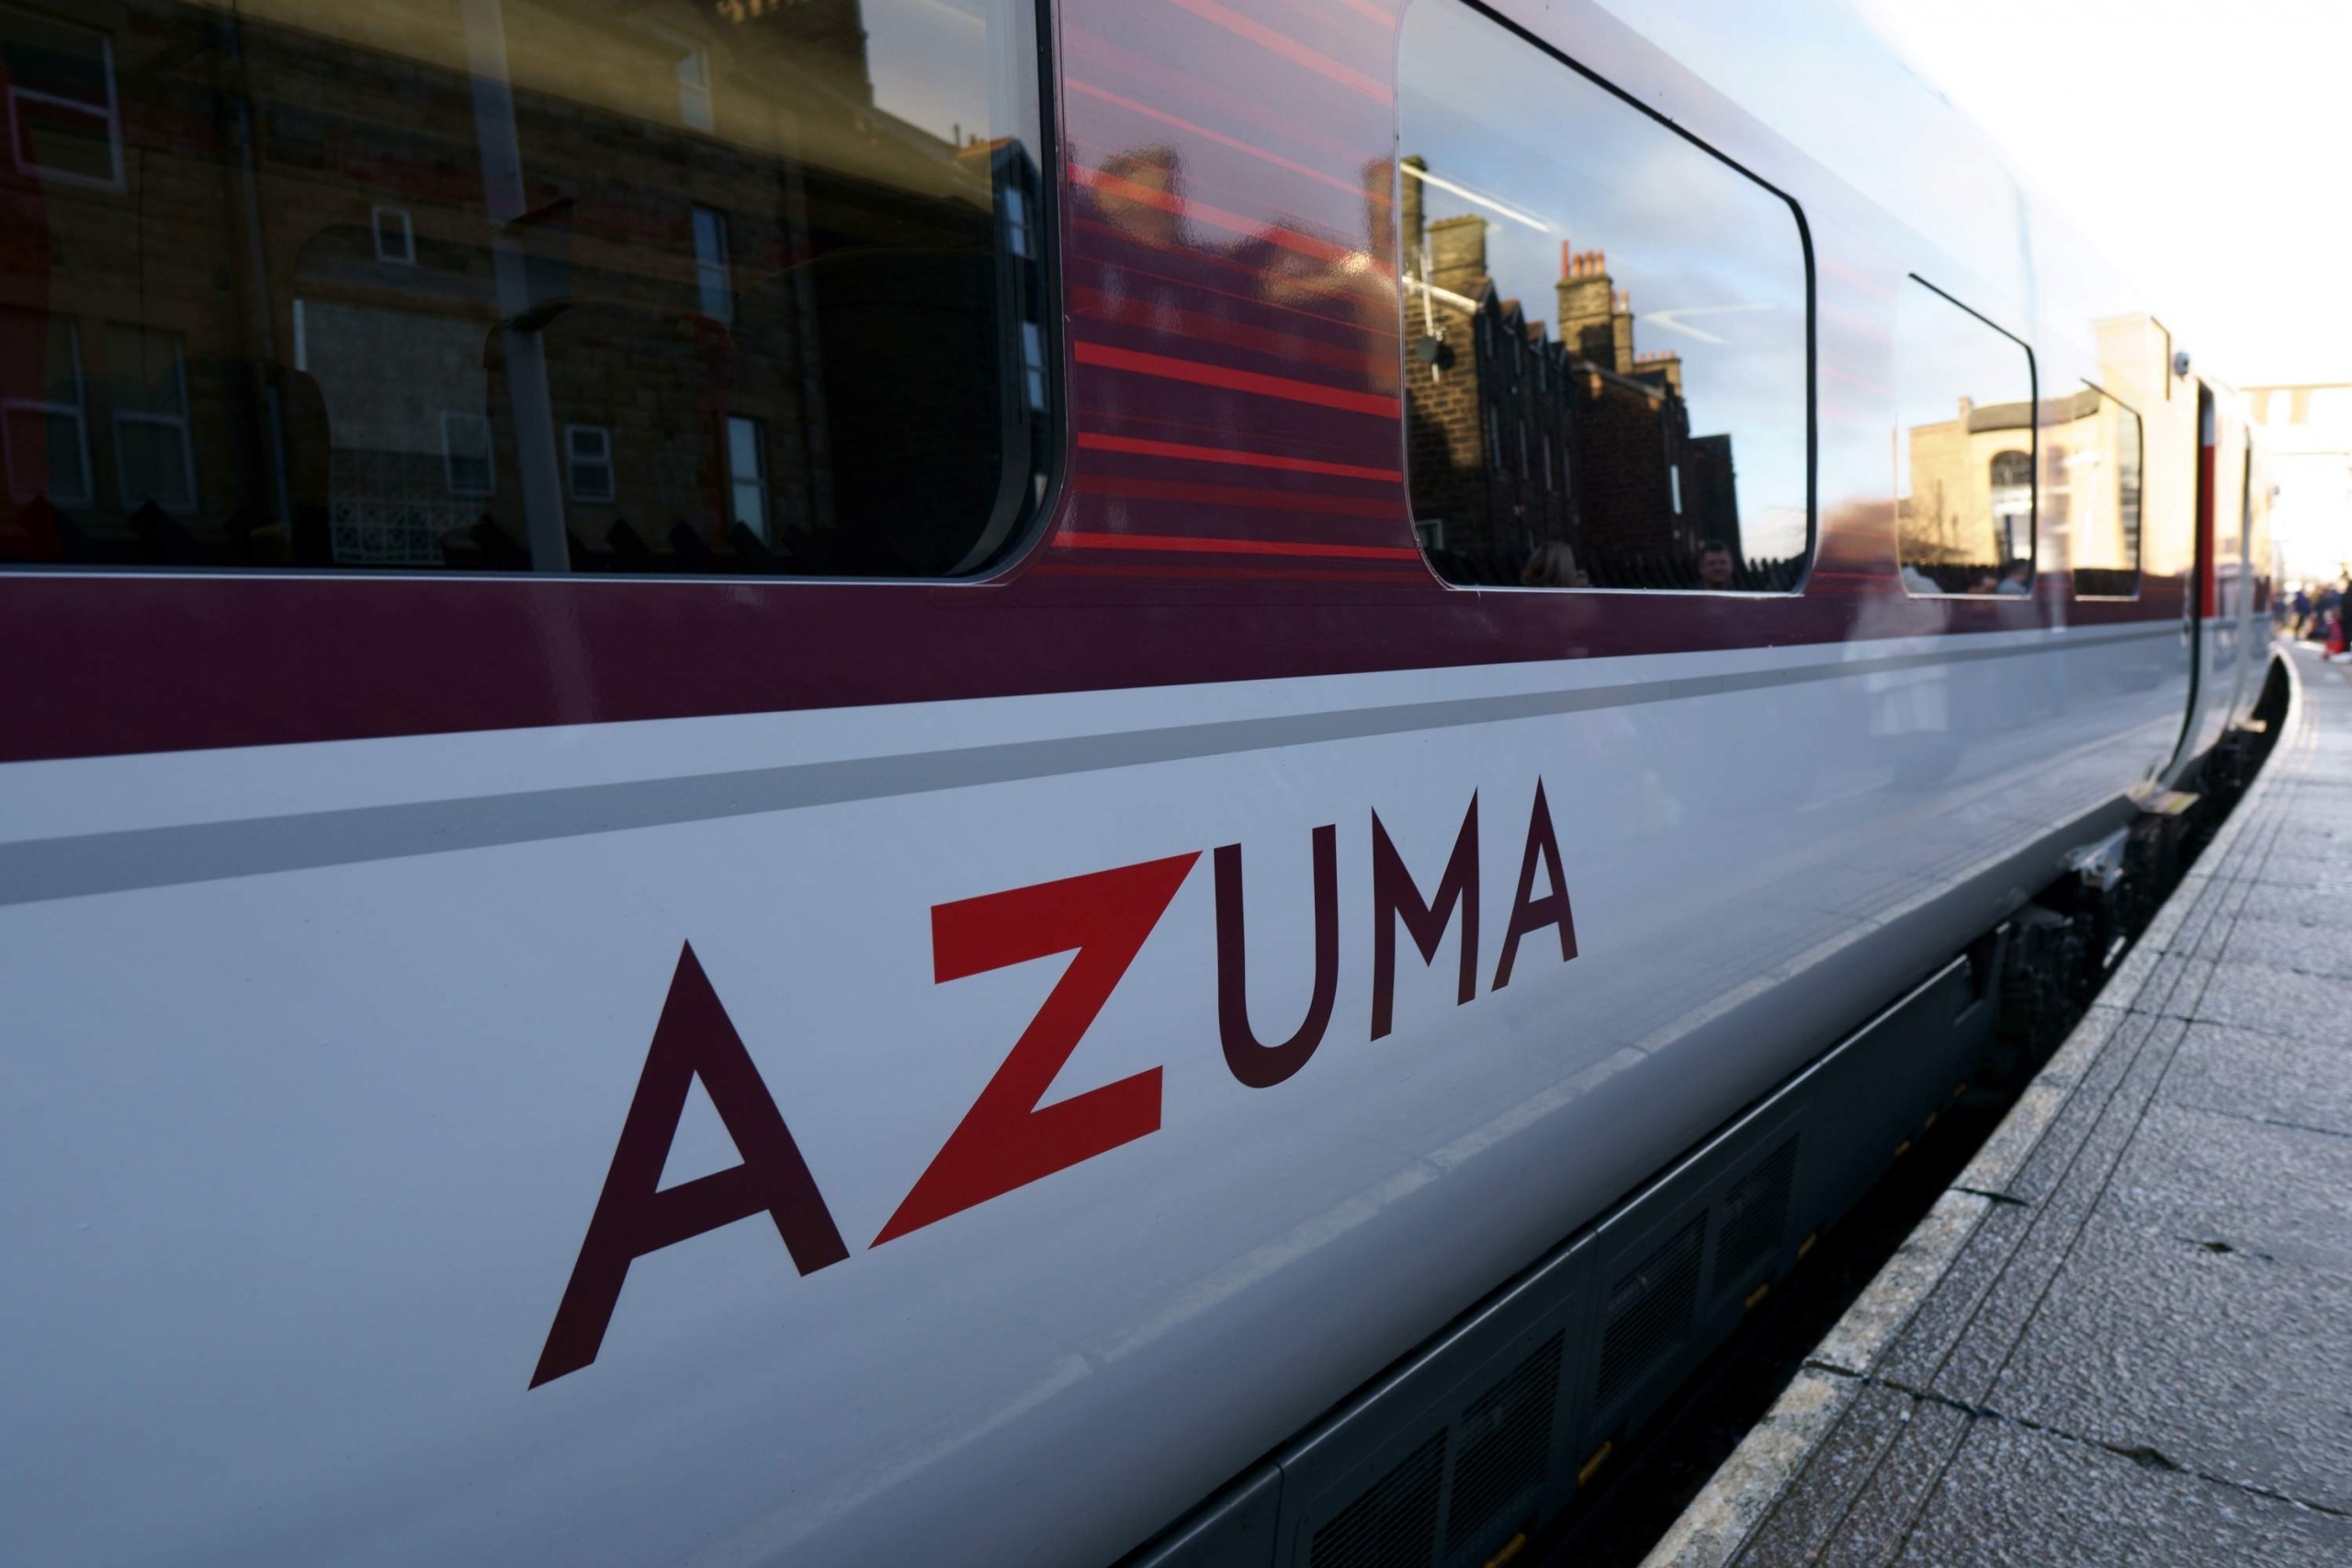 Azuma trains harrogate